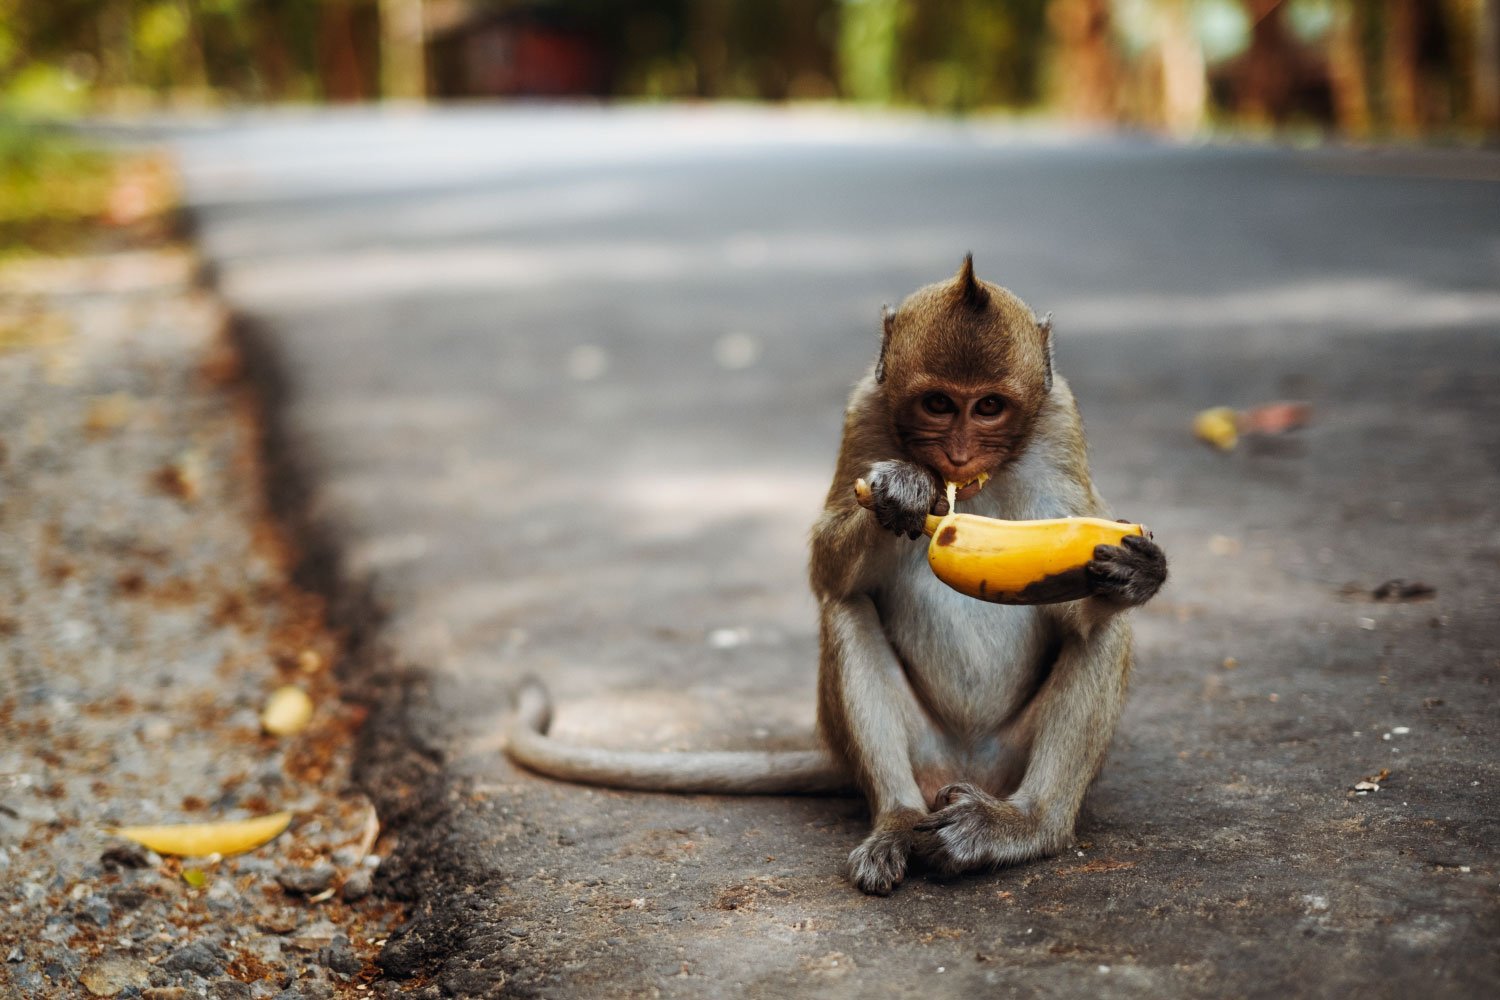 Bananas did you have. Обезьяна с бананом. Смешная обезьяна с бананом. Обезьяна ест банан. Obezyano s bansnom.